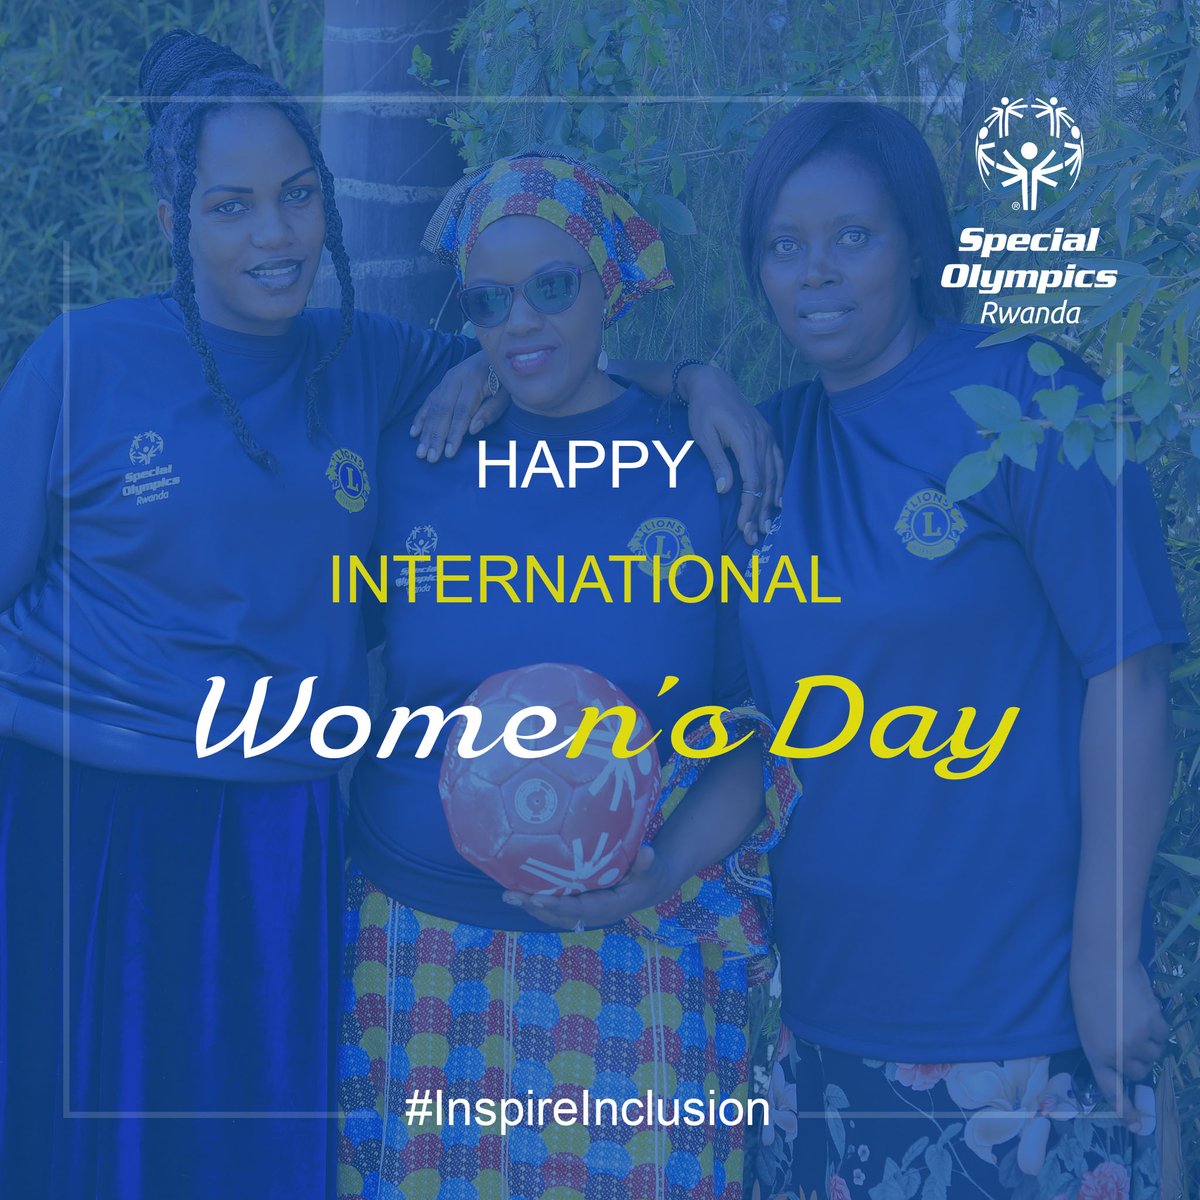 Happy International Women's Day
#InspireInclusion